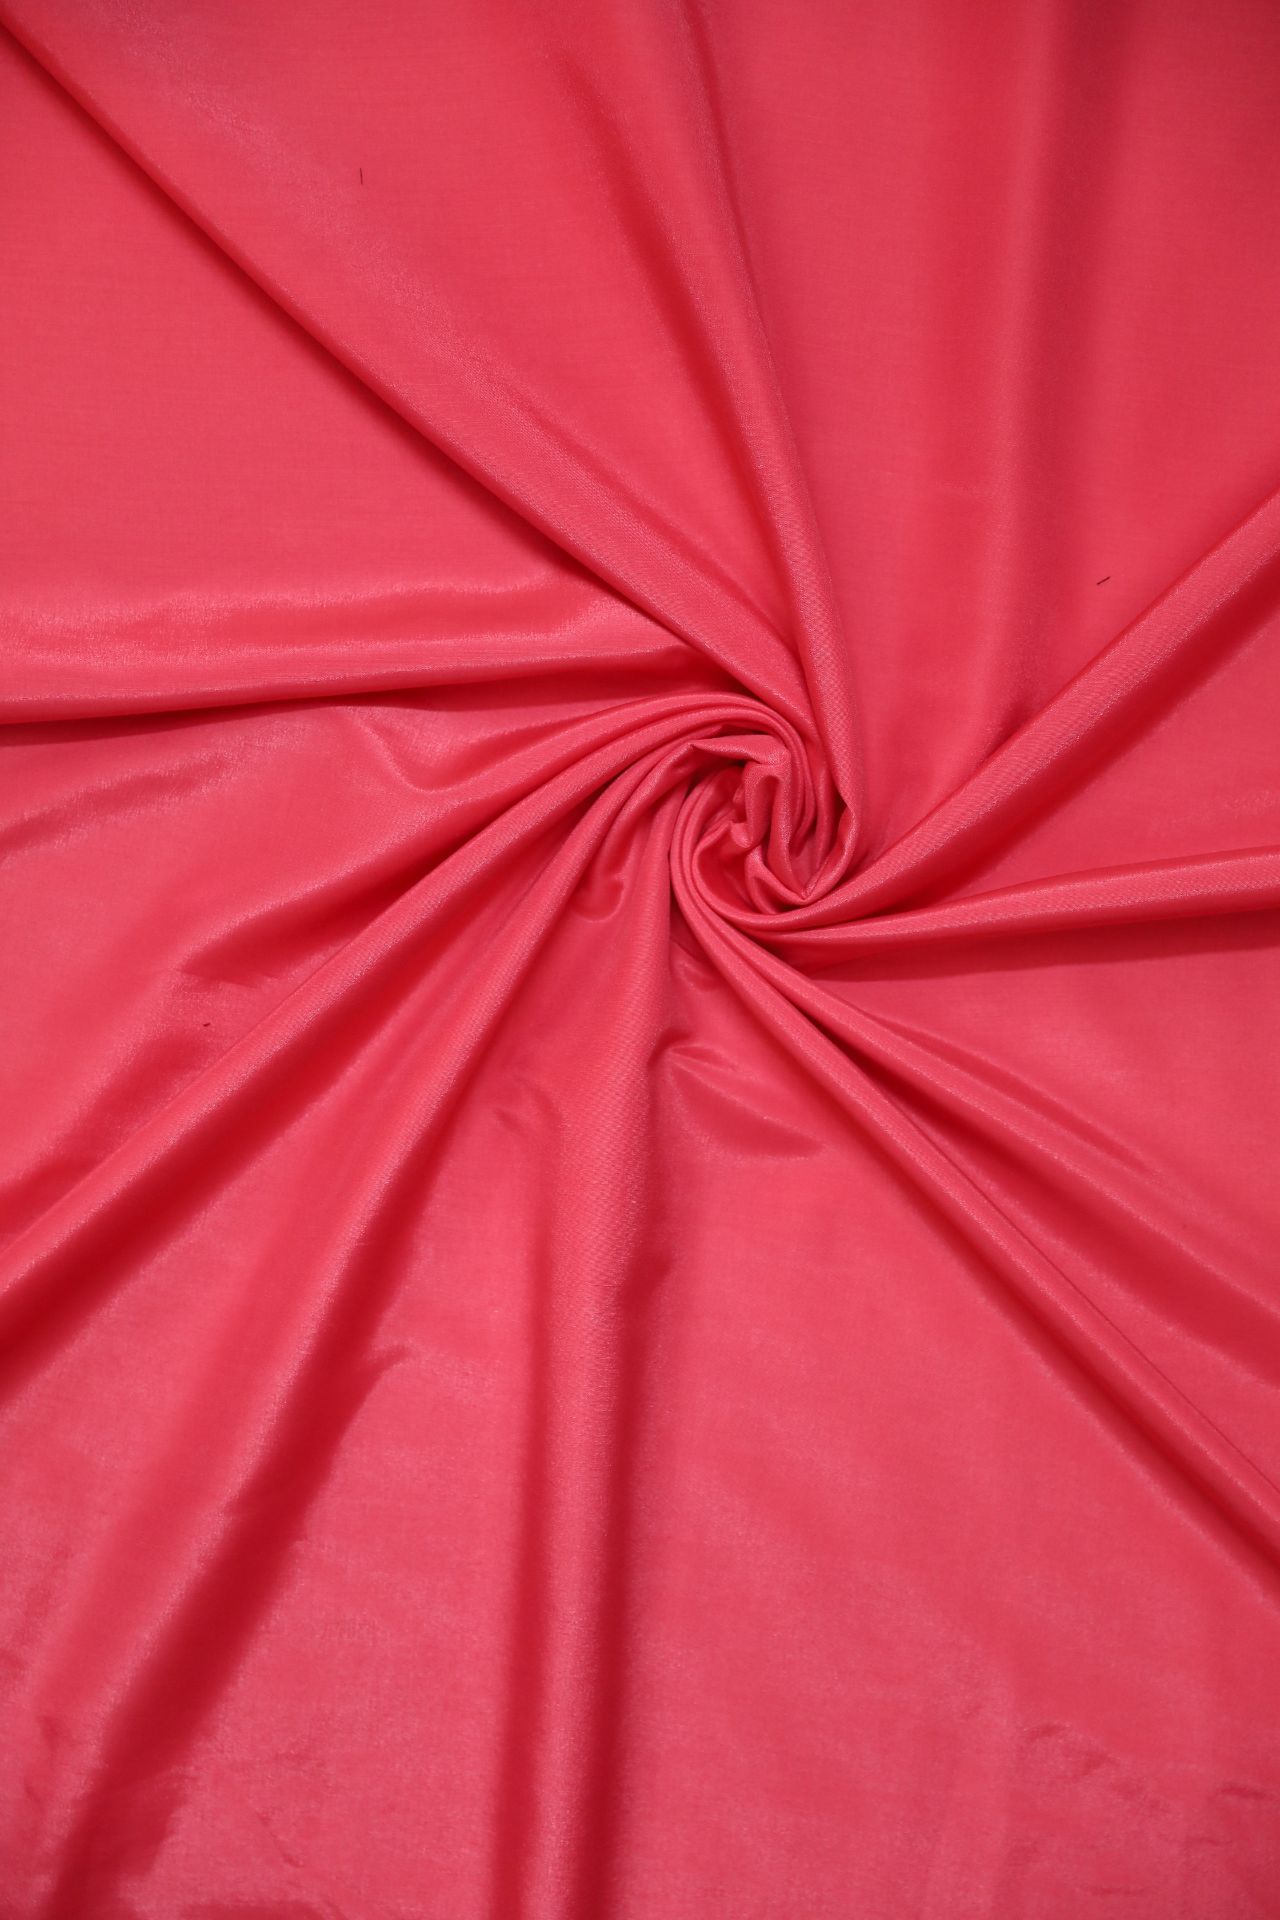 Plain Pink Santoon Fabric